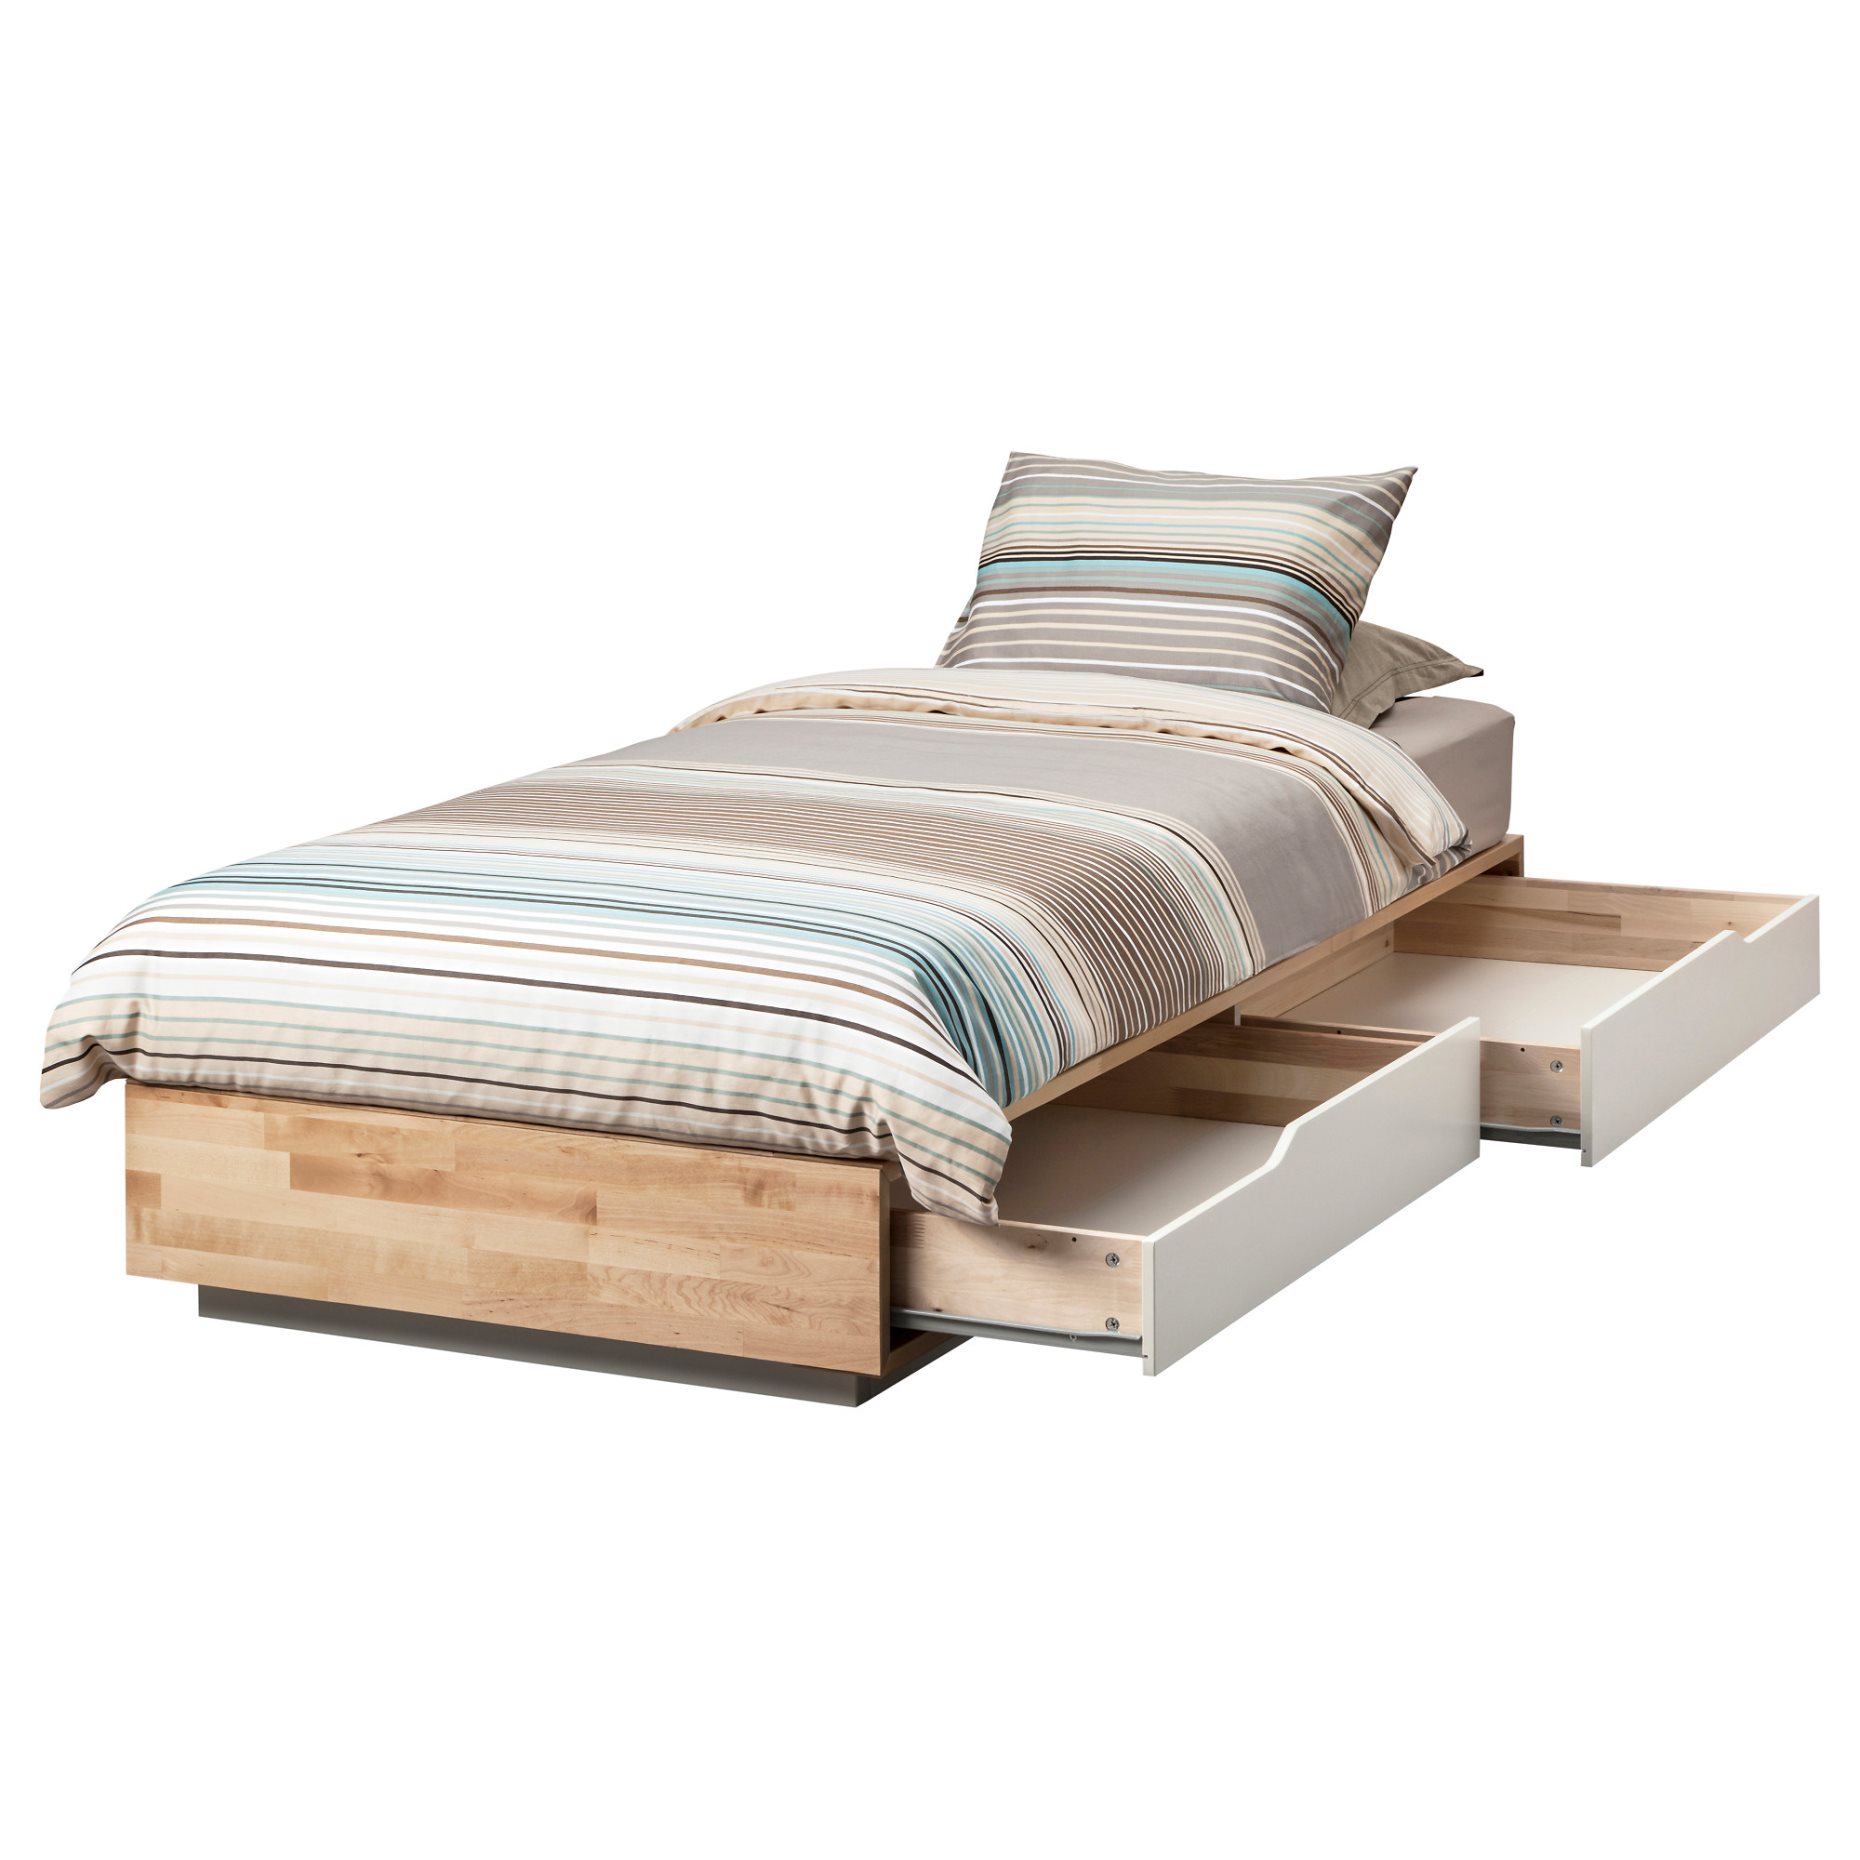 MANDAL, κρεβάτι με αποθηκευτικό χώρο, 90x200 cm, 602.446.08